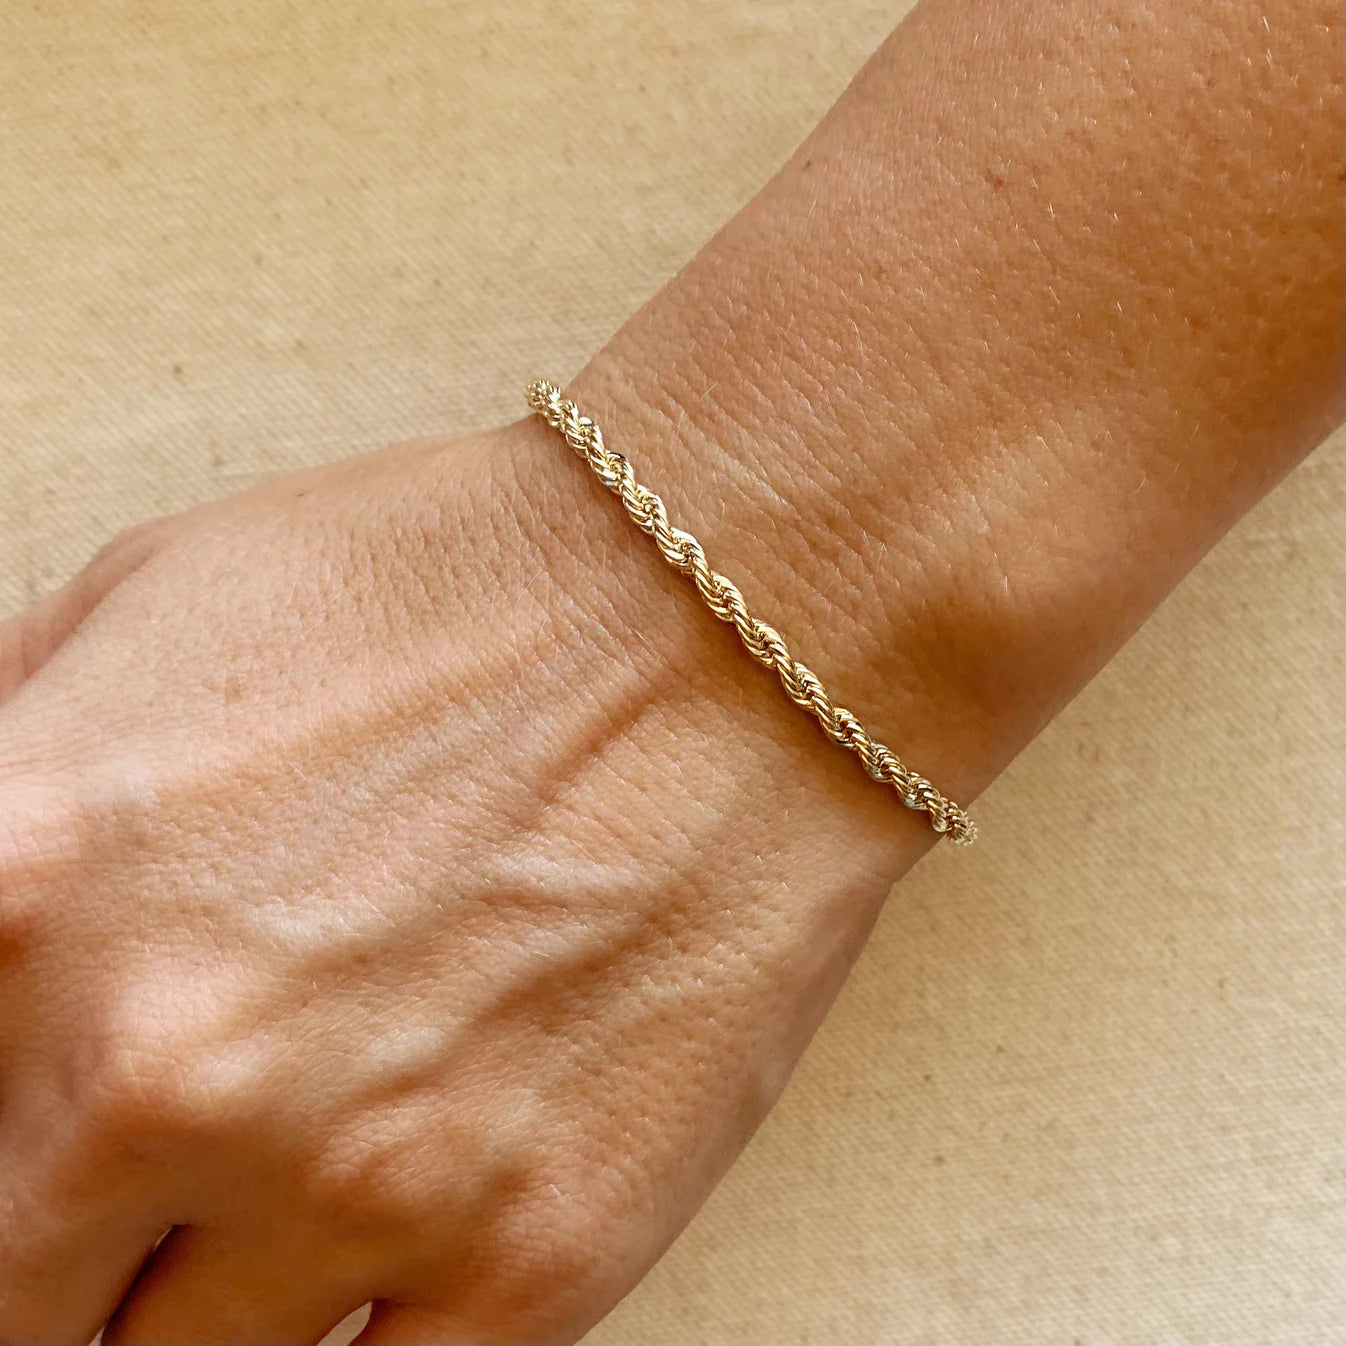 Buy 18 K Gold Filled Rope Bracelet Gold Chain Bracelet Rope Online